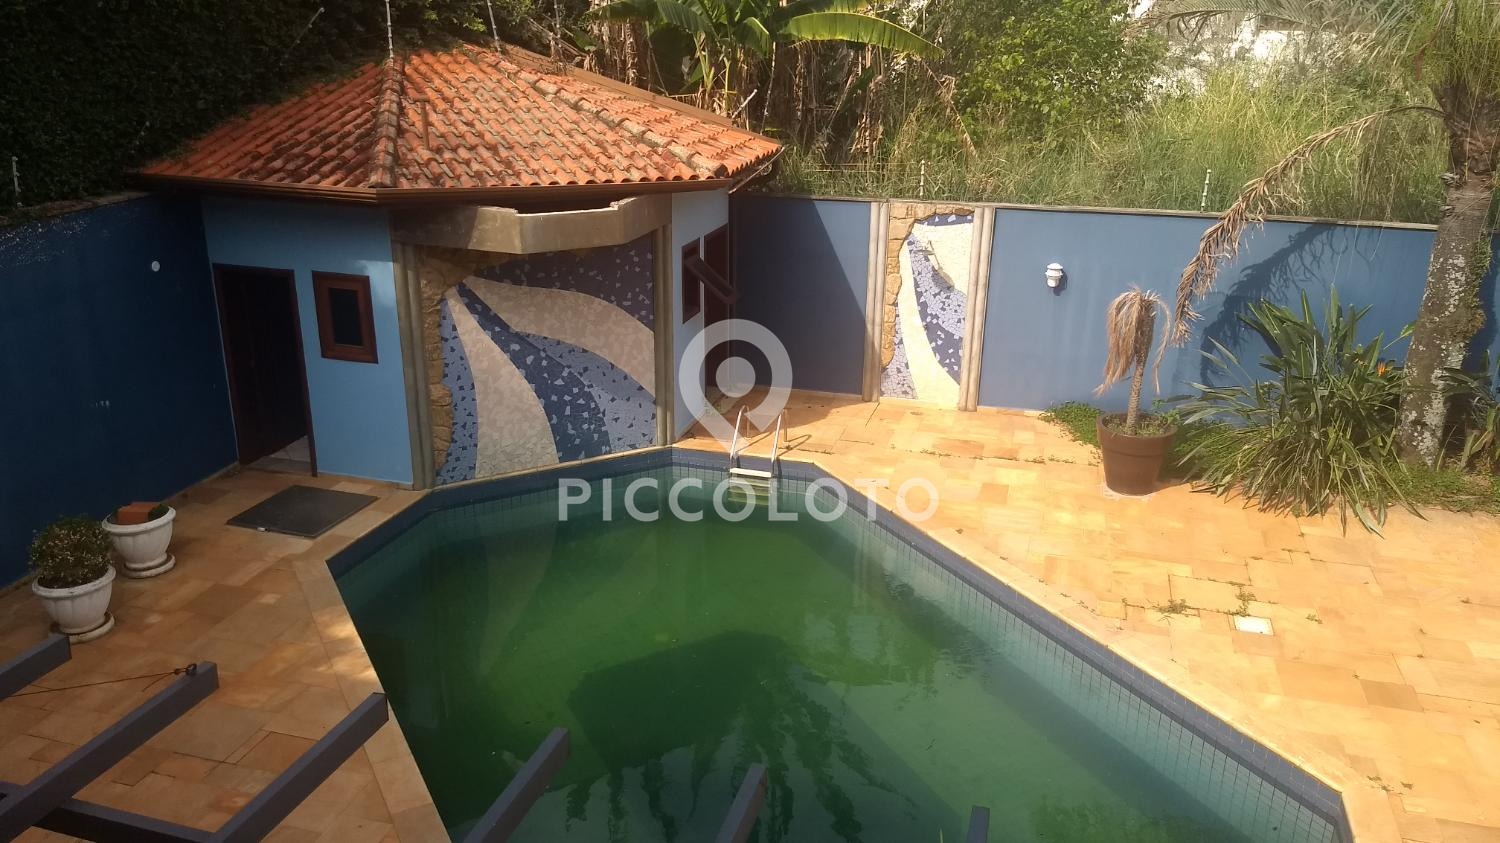 Piccoloto -Casa à venda no Taquaral em Campinas